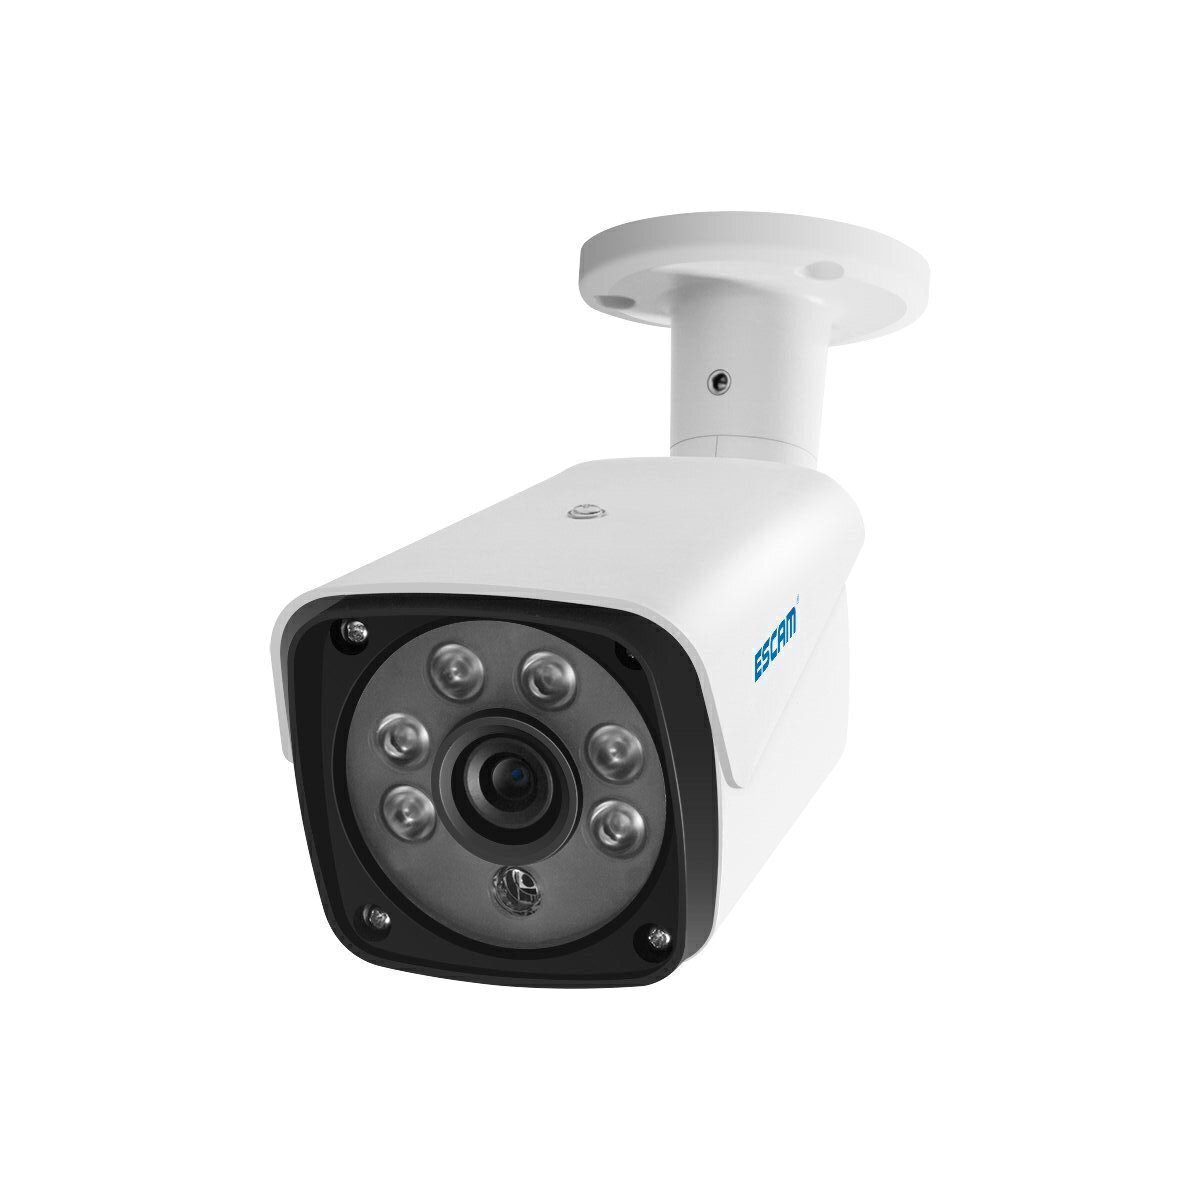 ESCAM QH002 HD 1080P IP Camera ONVIF H.265 P2P Outdoor Waterproof IR Bullet with Smart Analysis Function Surveillance Security Camera 29